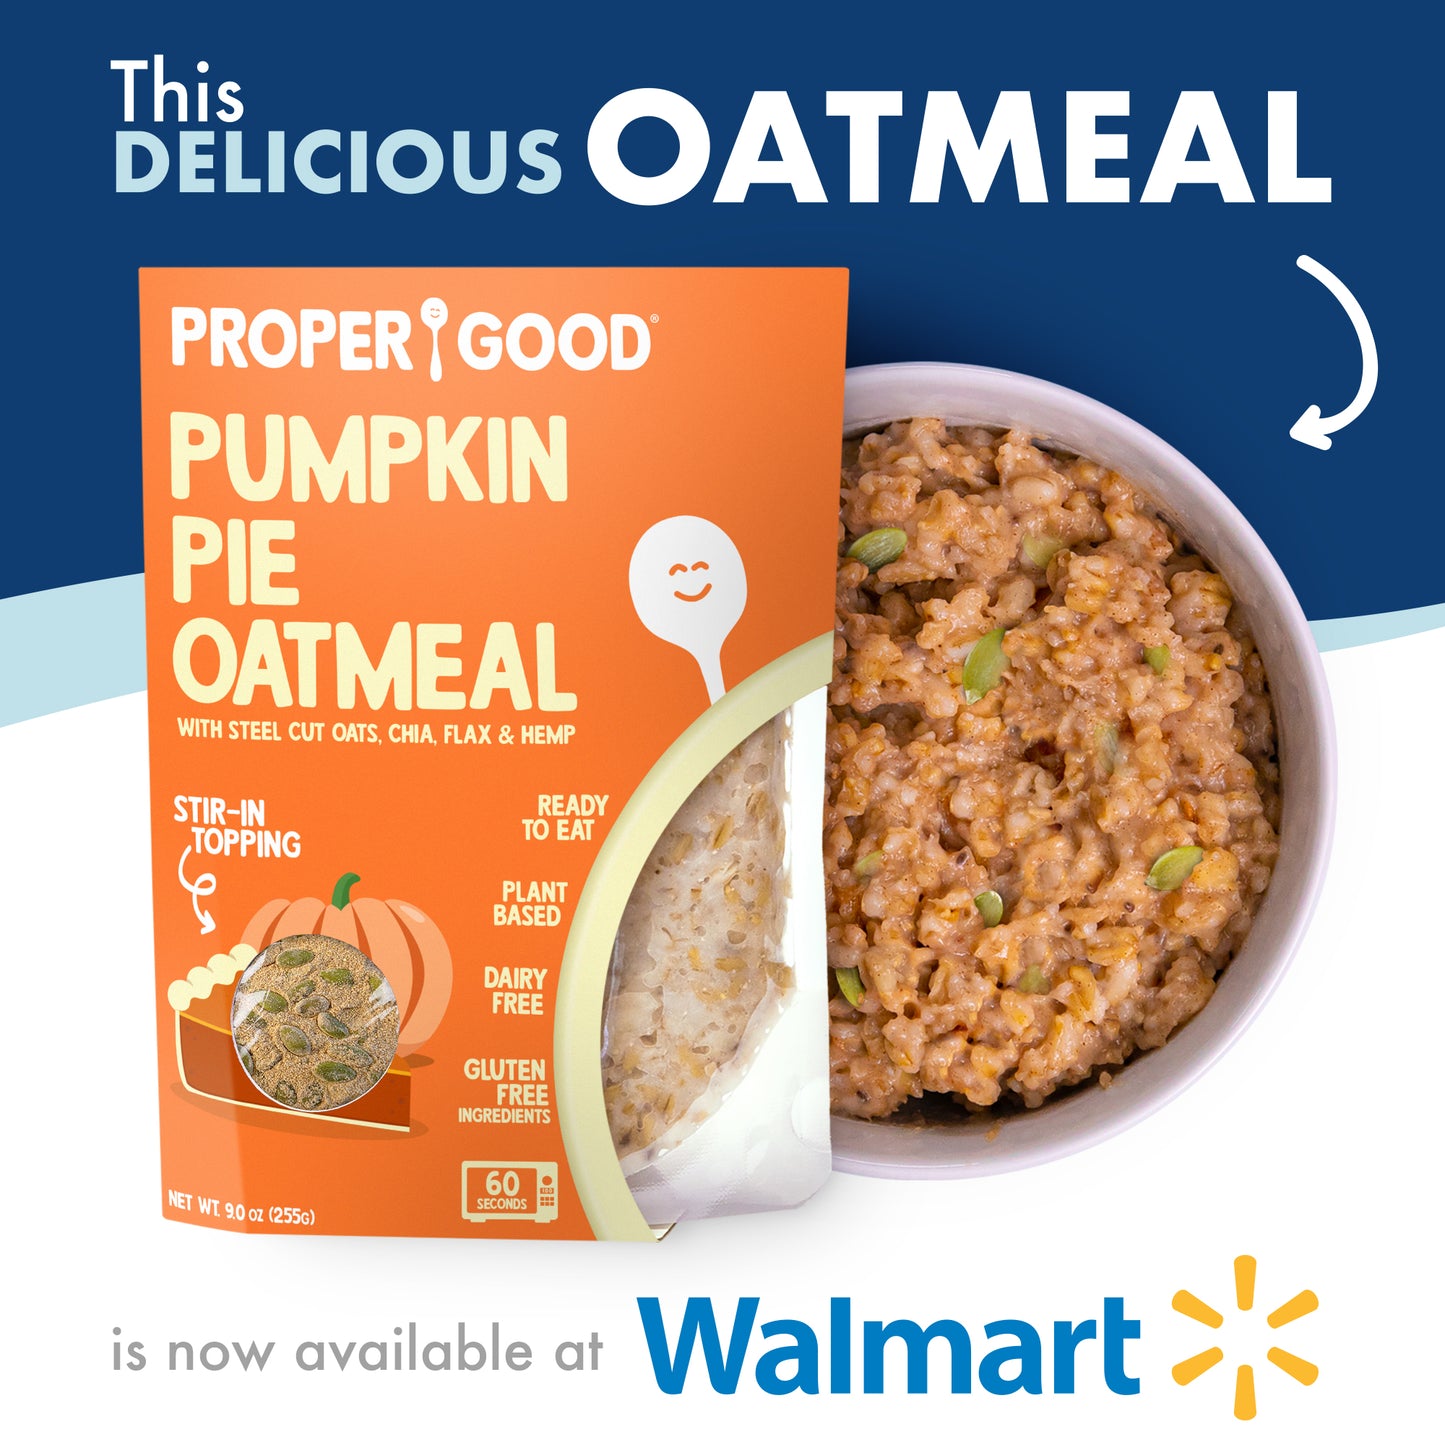 Pumpkin Pie Oatmeal now available in Walmart - Eat Proper Good